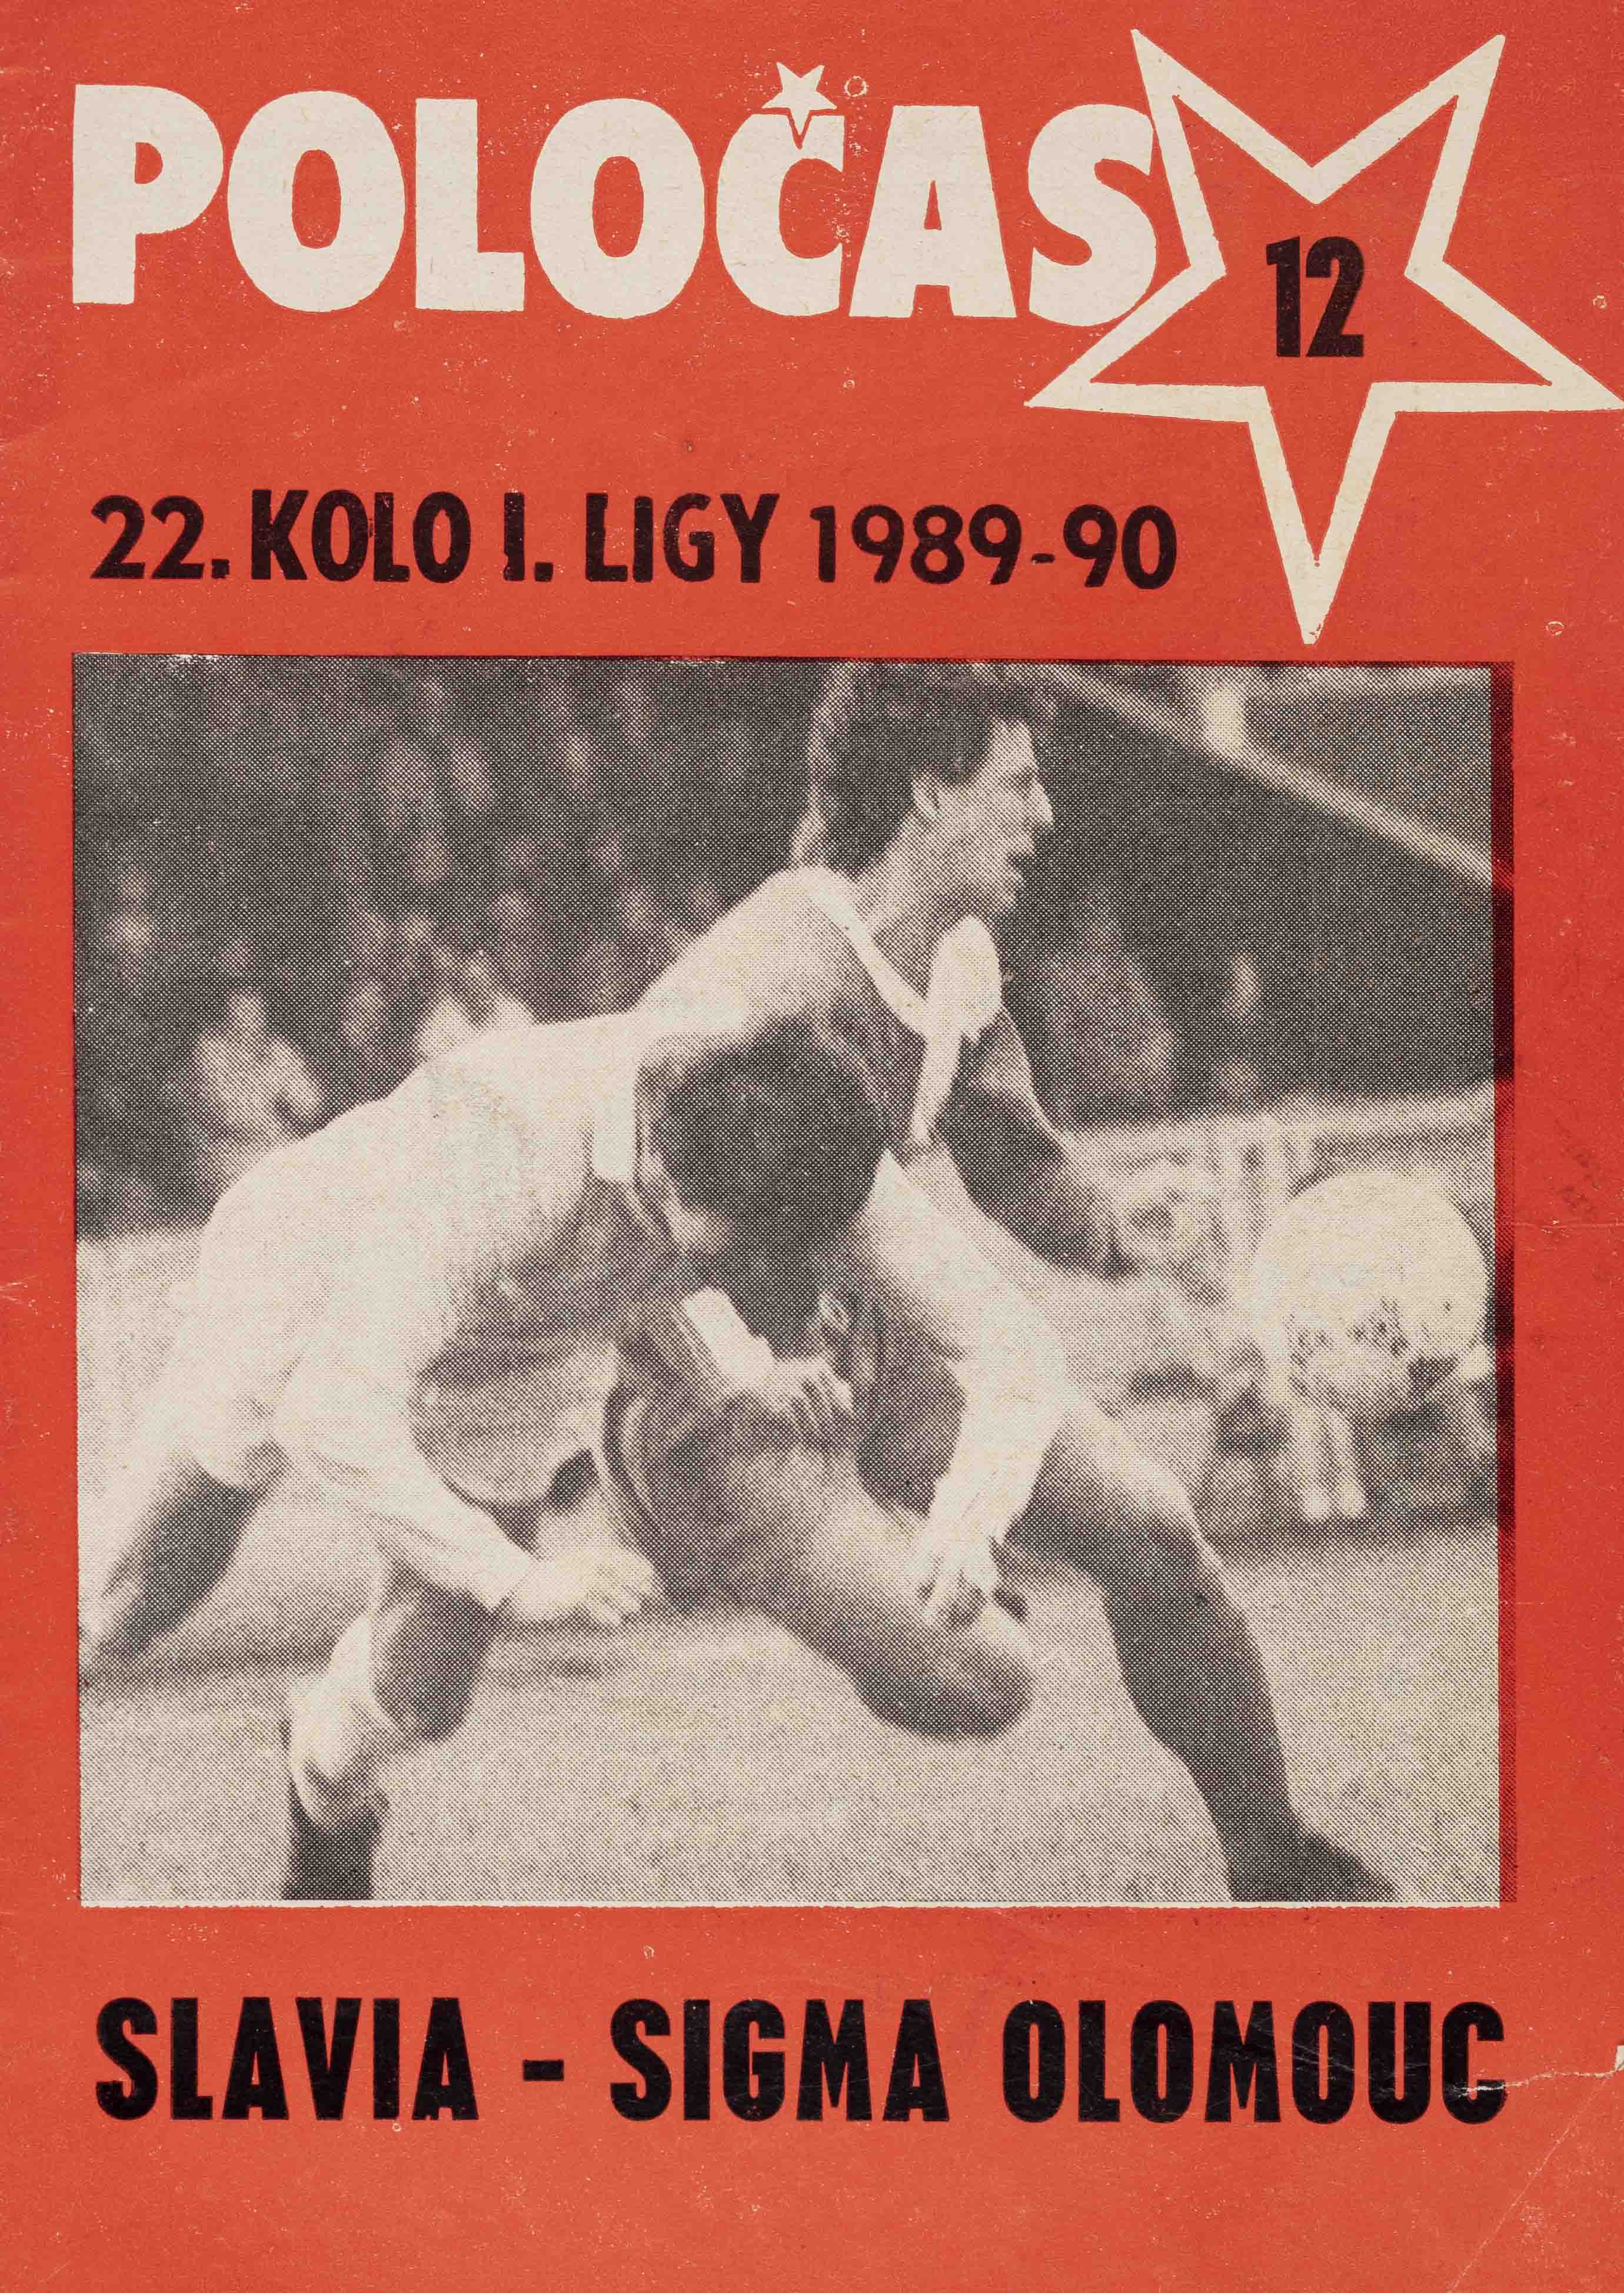 Poločas Slavia Praha vs. Sigma Olomouc, 1989-90 (12)